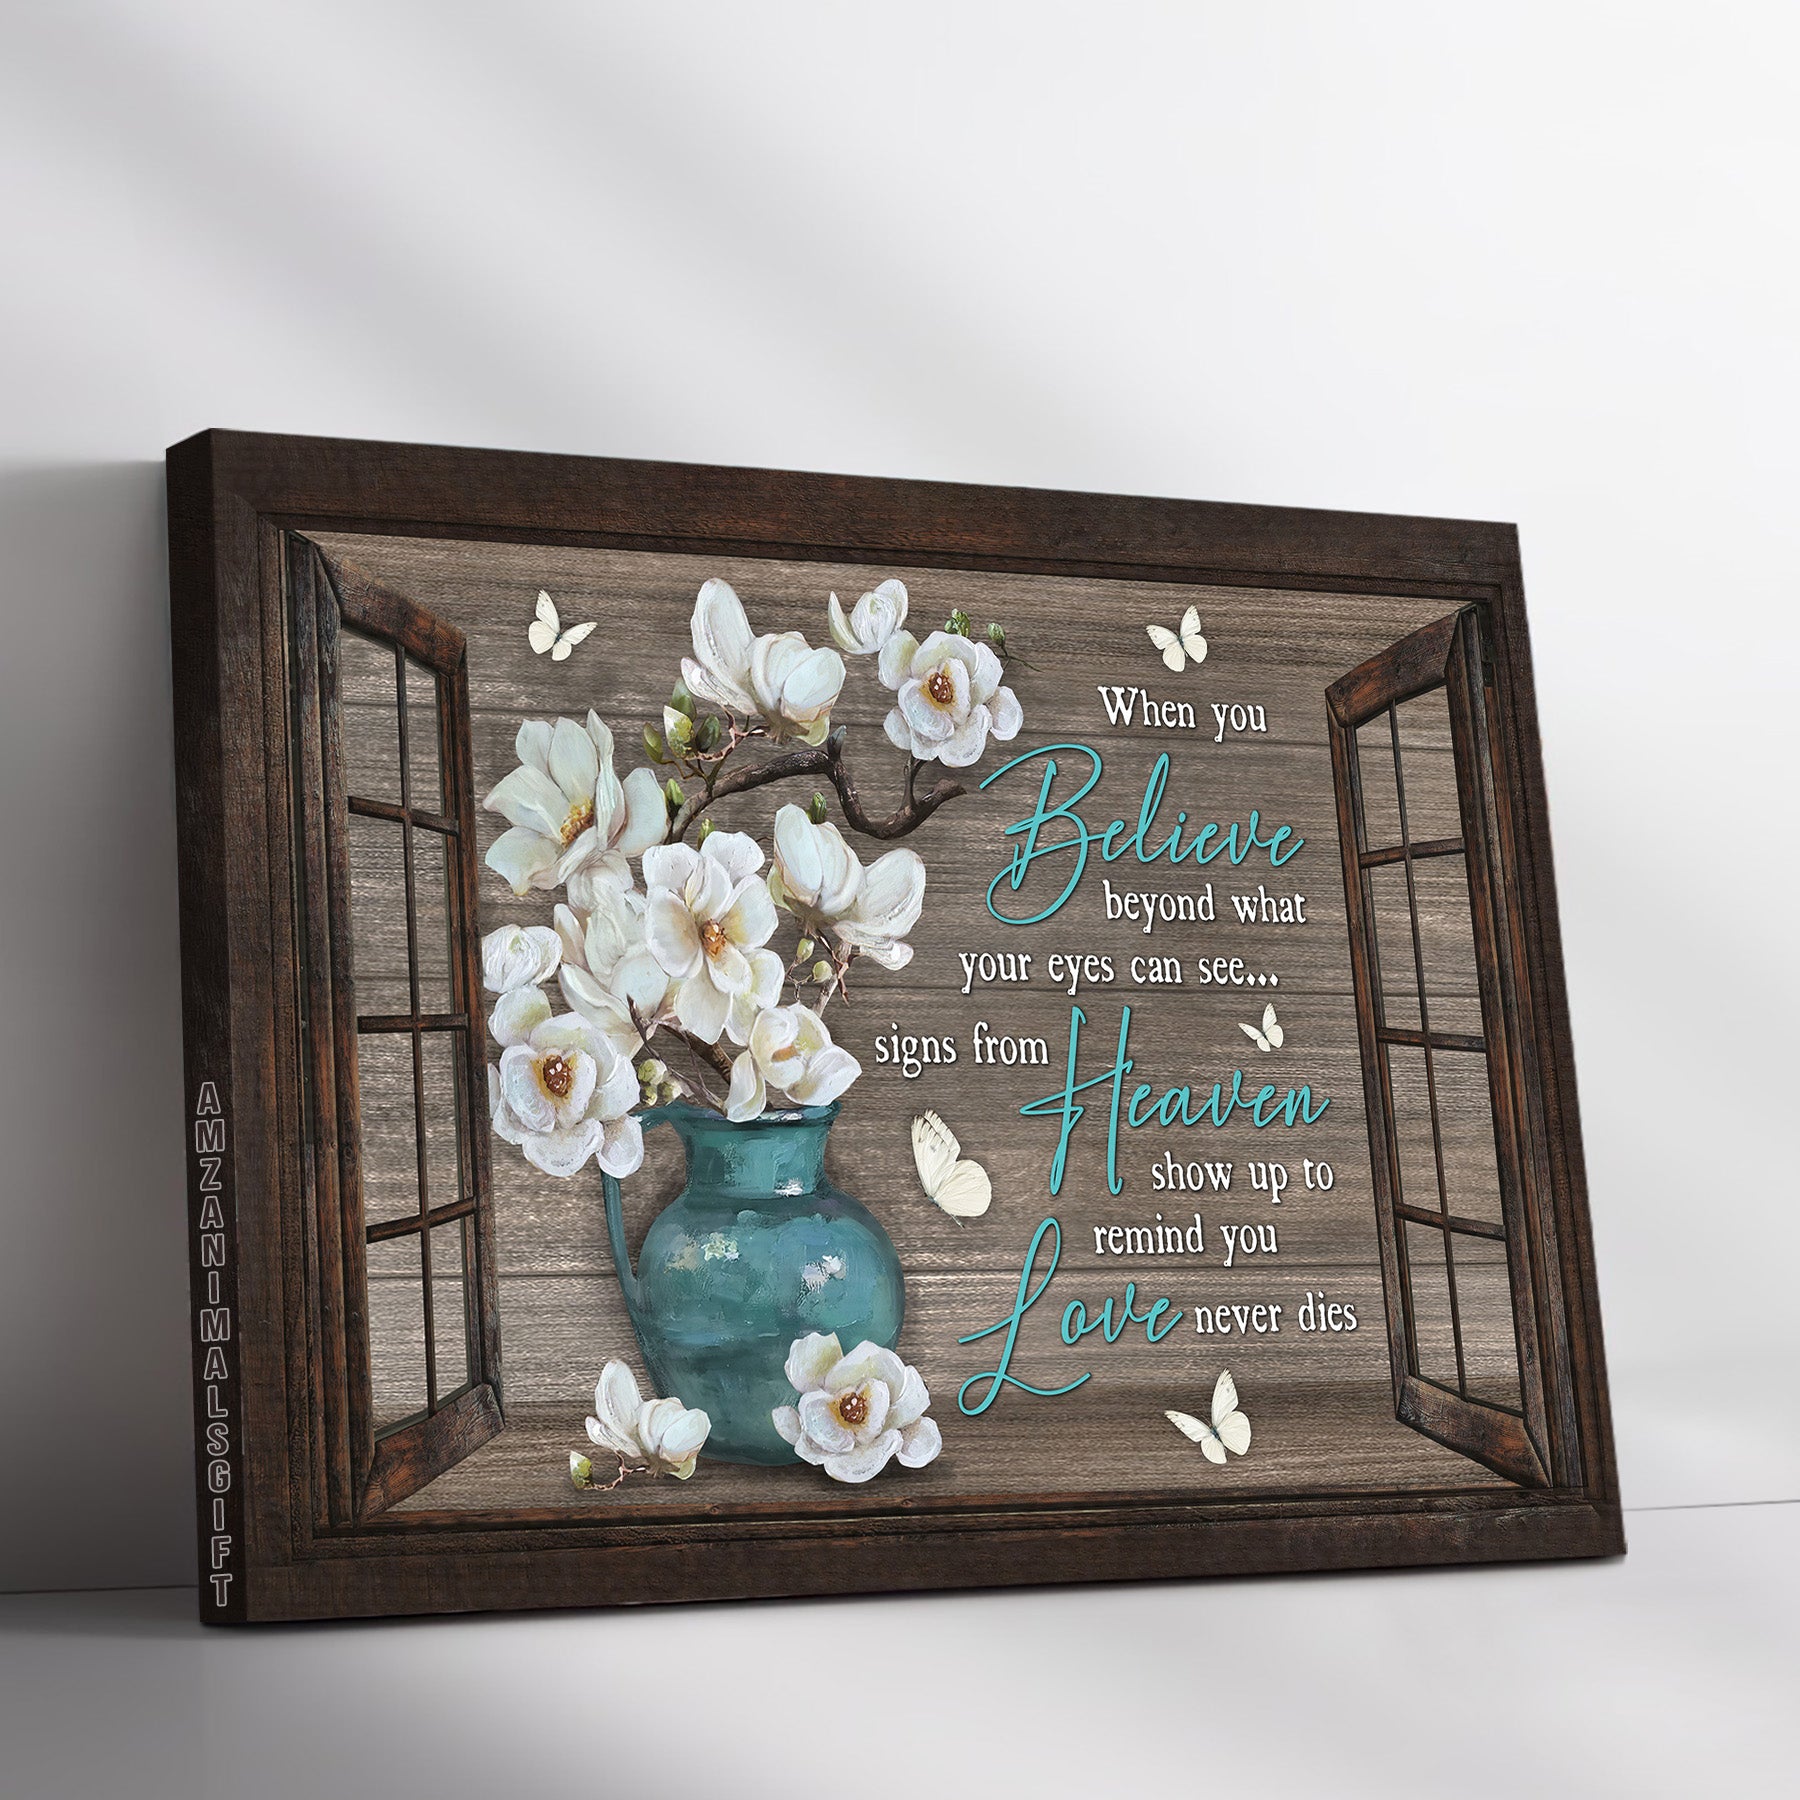 Memorial Premium Wrapped Landscape Canvas - White Flower, White Butterfly, Window Frame, Love Never Dies - Heaven Gift For Members Family